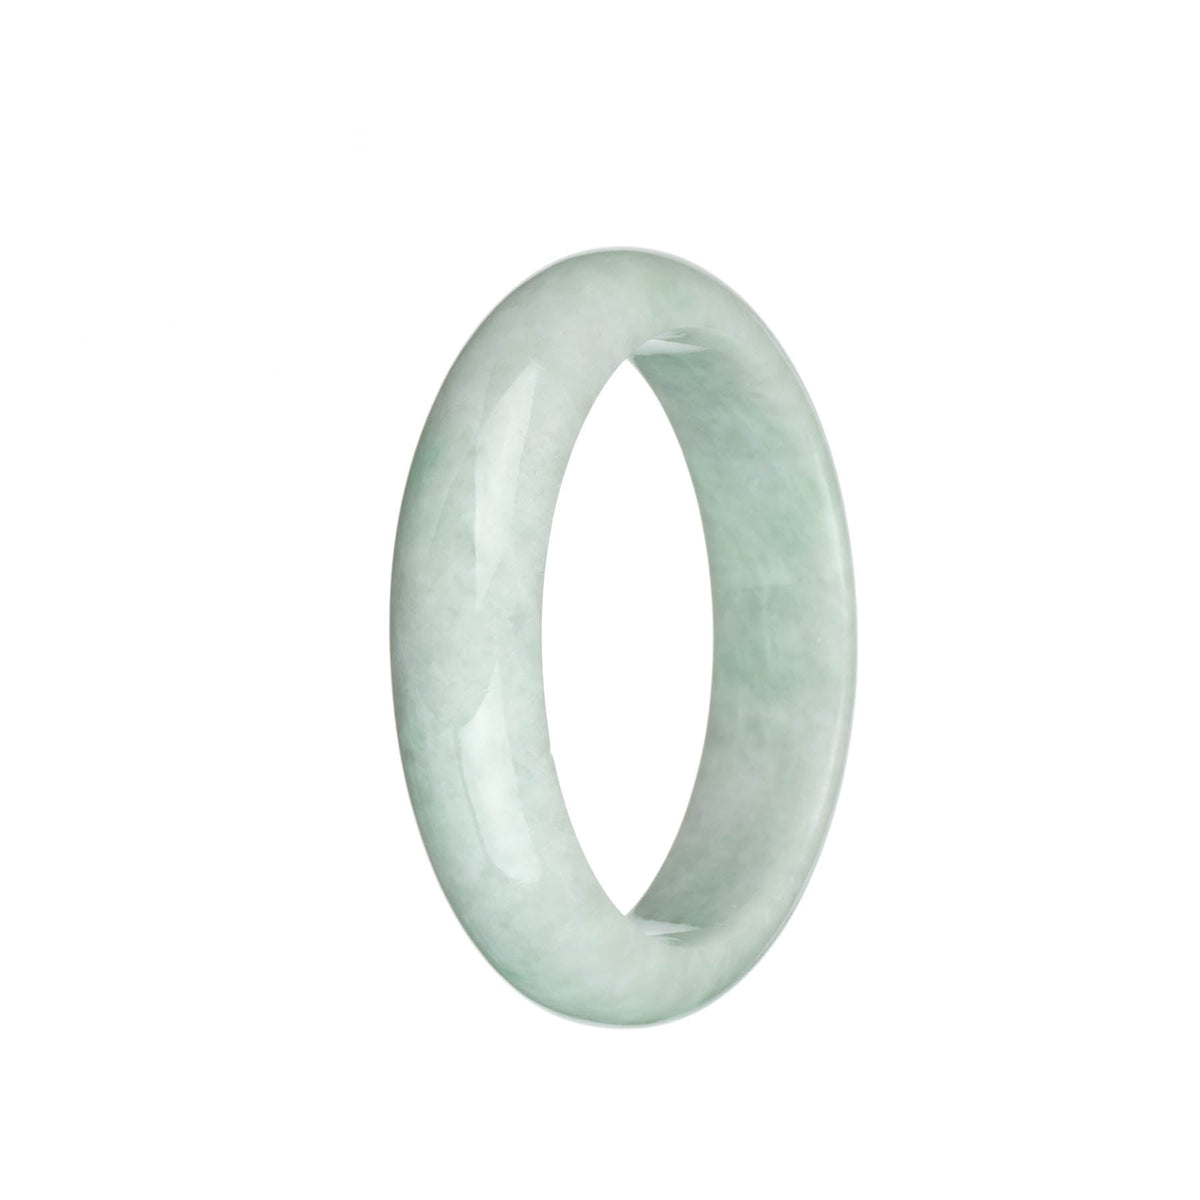 An elegant half moon-shaped bracelet made of certified Grade A Plae Green Burma Jade measuring 59mm.